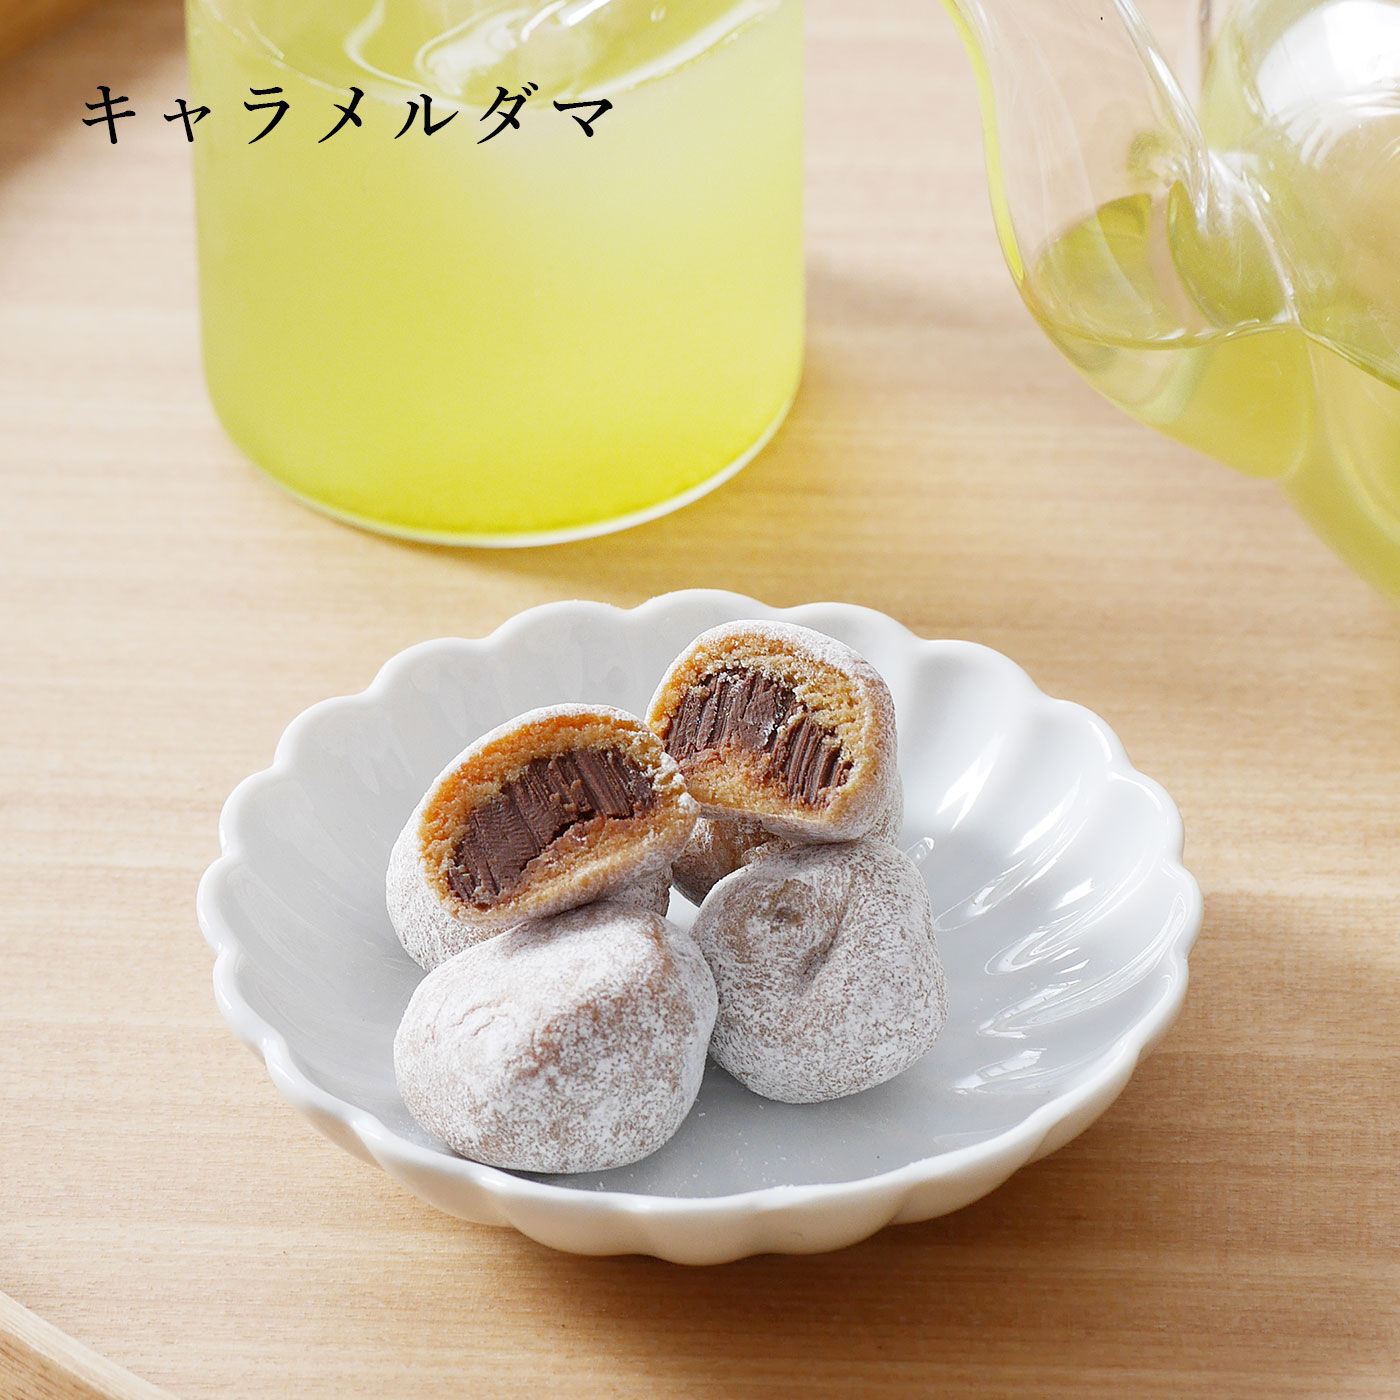 FP産地直送マルシェ|大正十年日本橋創業きな粉菓子専門店のキナコロンを楽しむセット